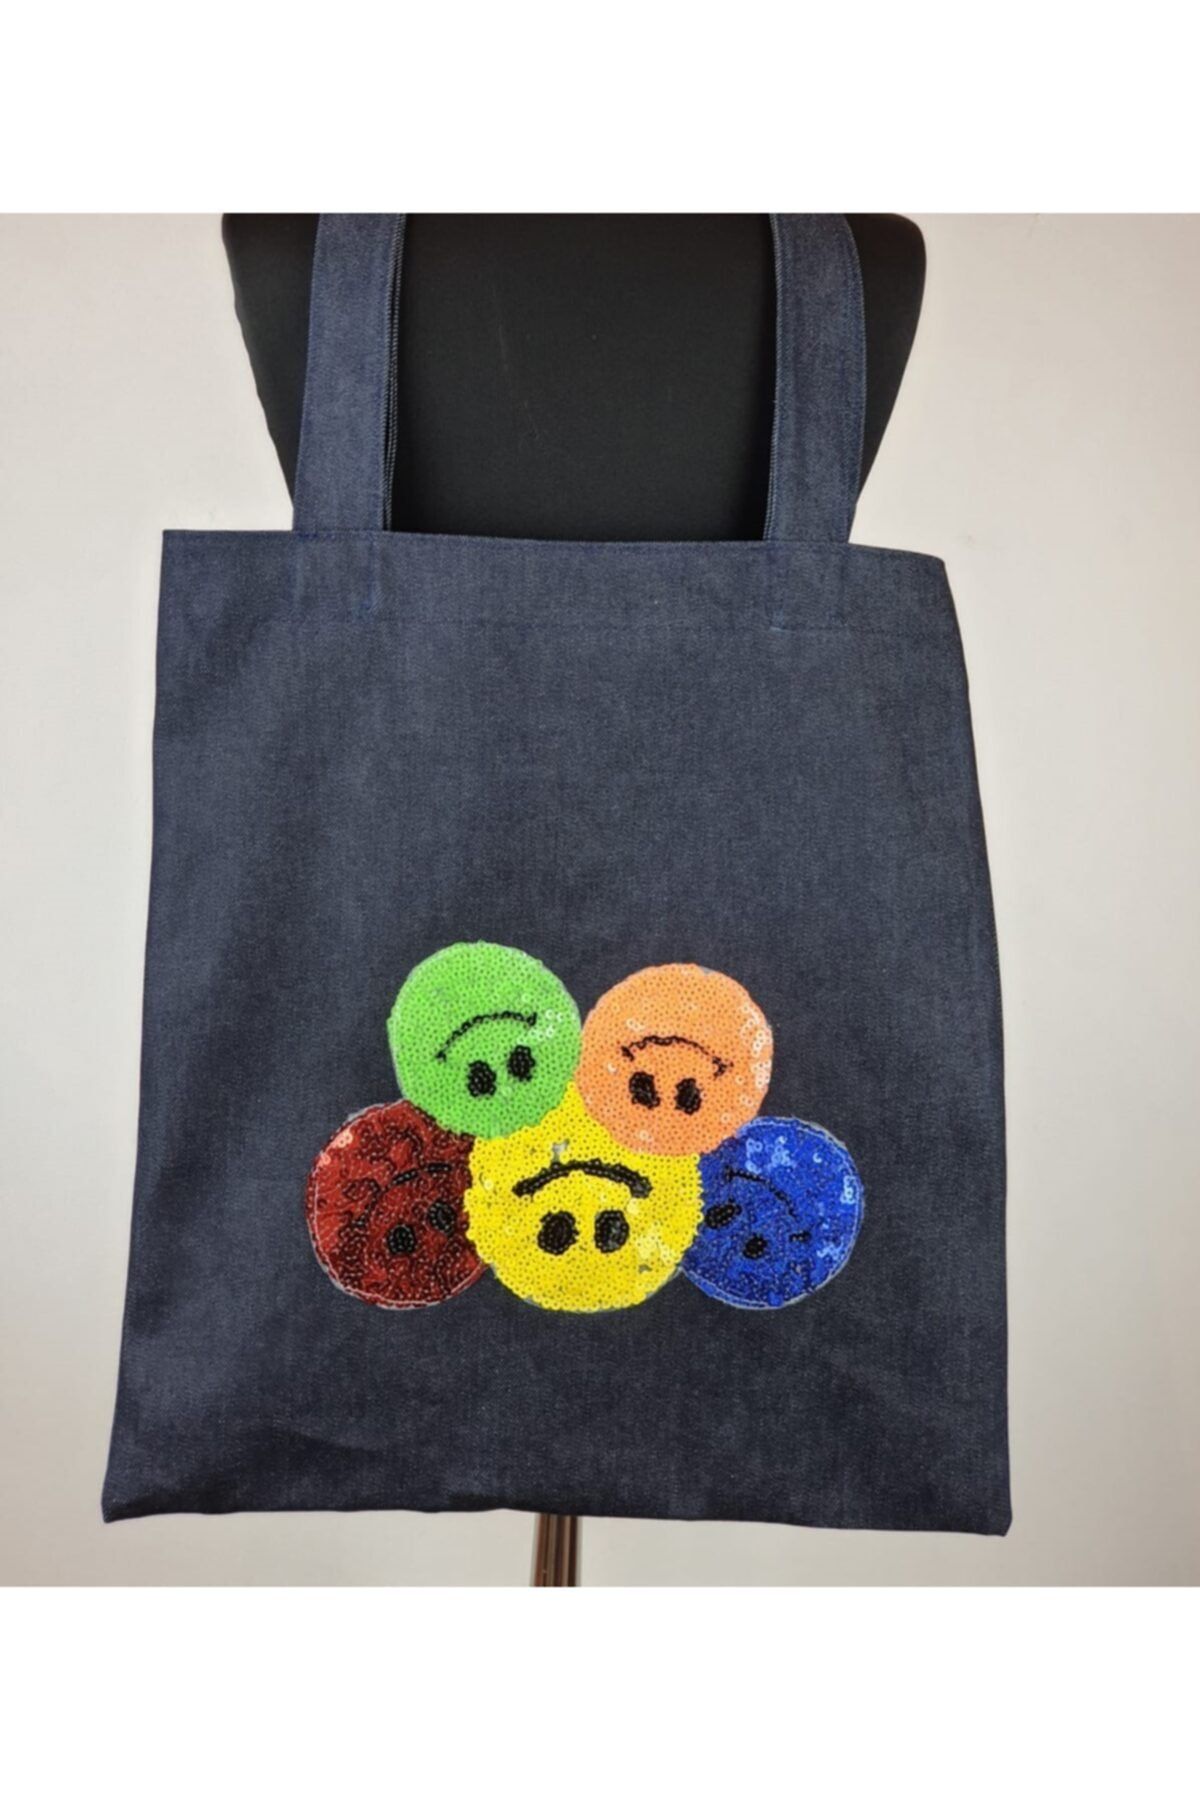 EMOJI PARTY Beach Bag Emoticon Smiley Emojis Face Favour Gift Tote Bags Pk  of 4 | eBay